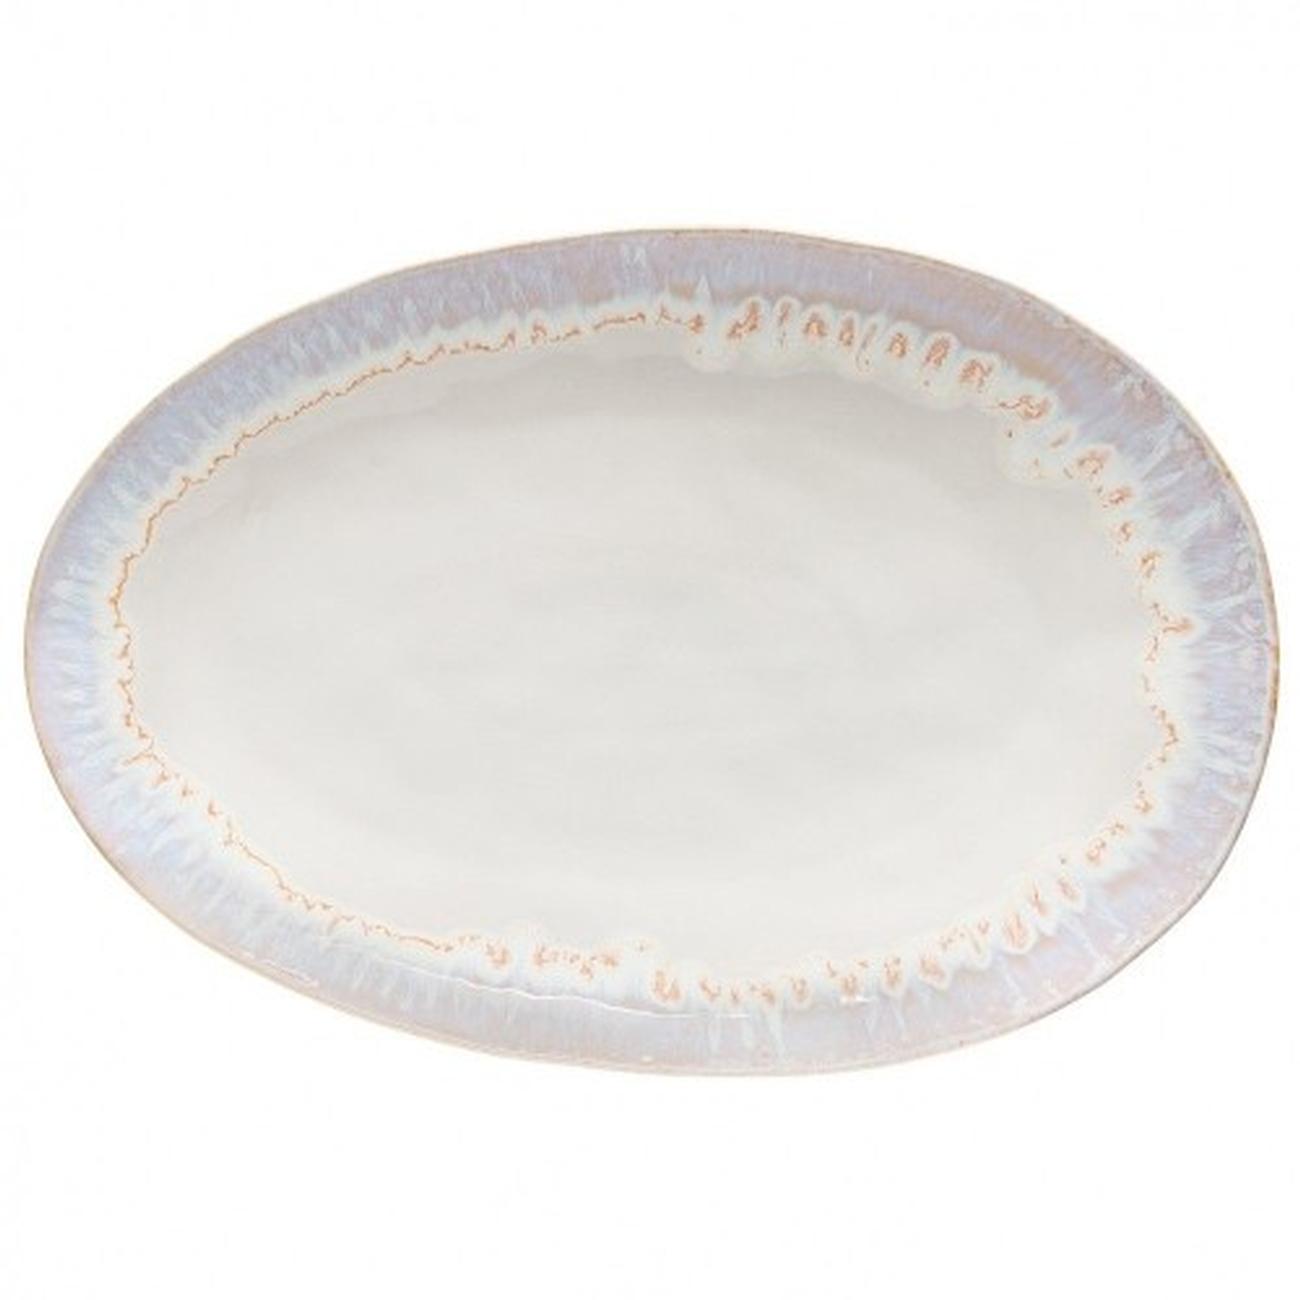 costa-nova-oval-platter-large-41cm-brisa-salt - Costa Nova Brisa Salt Oval Platter 41cm